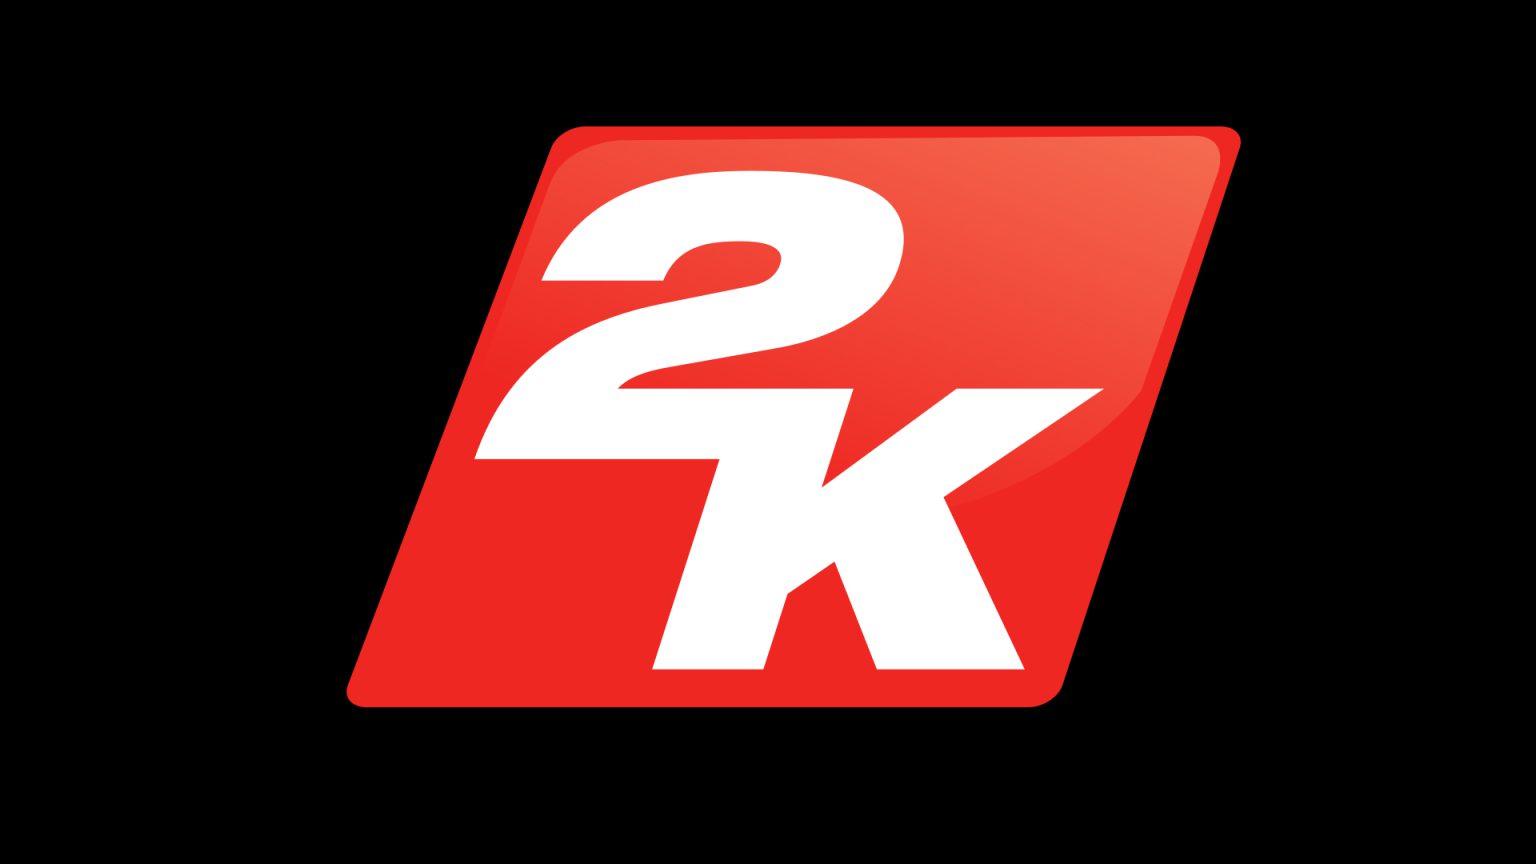 logo 2k games generacion xbox